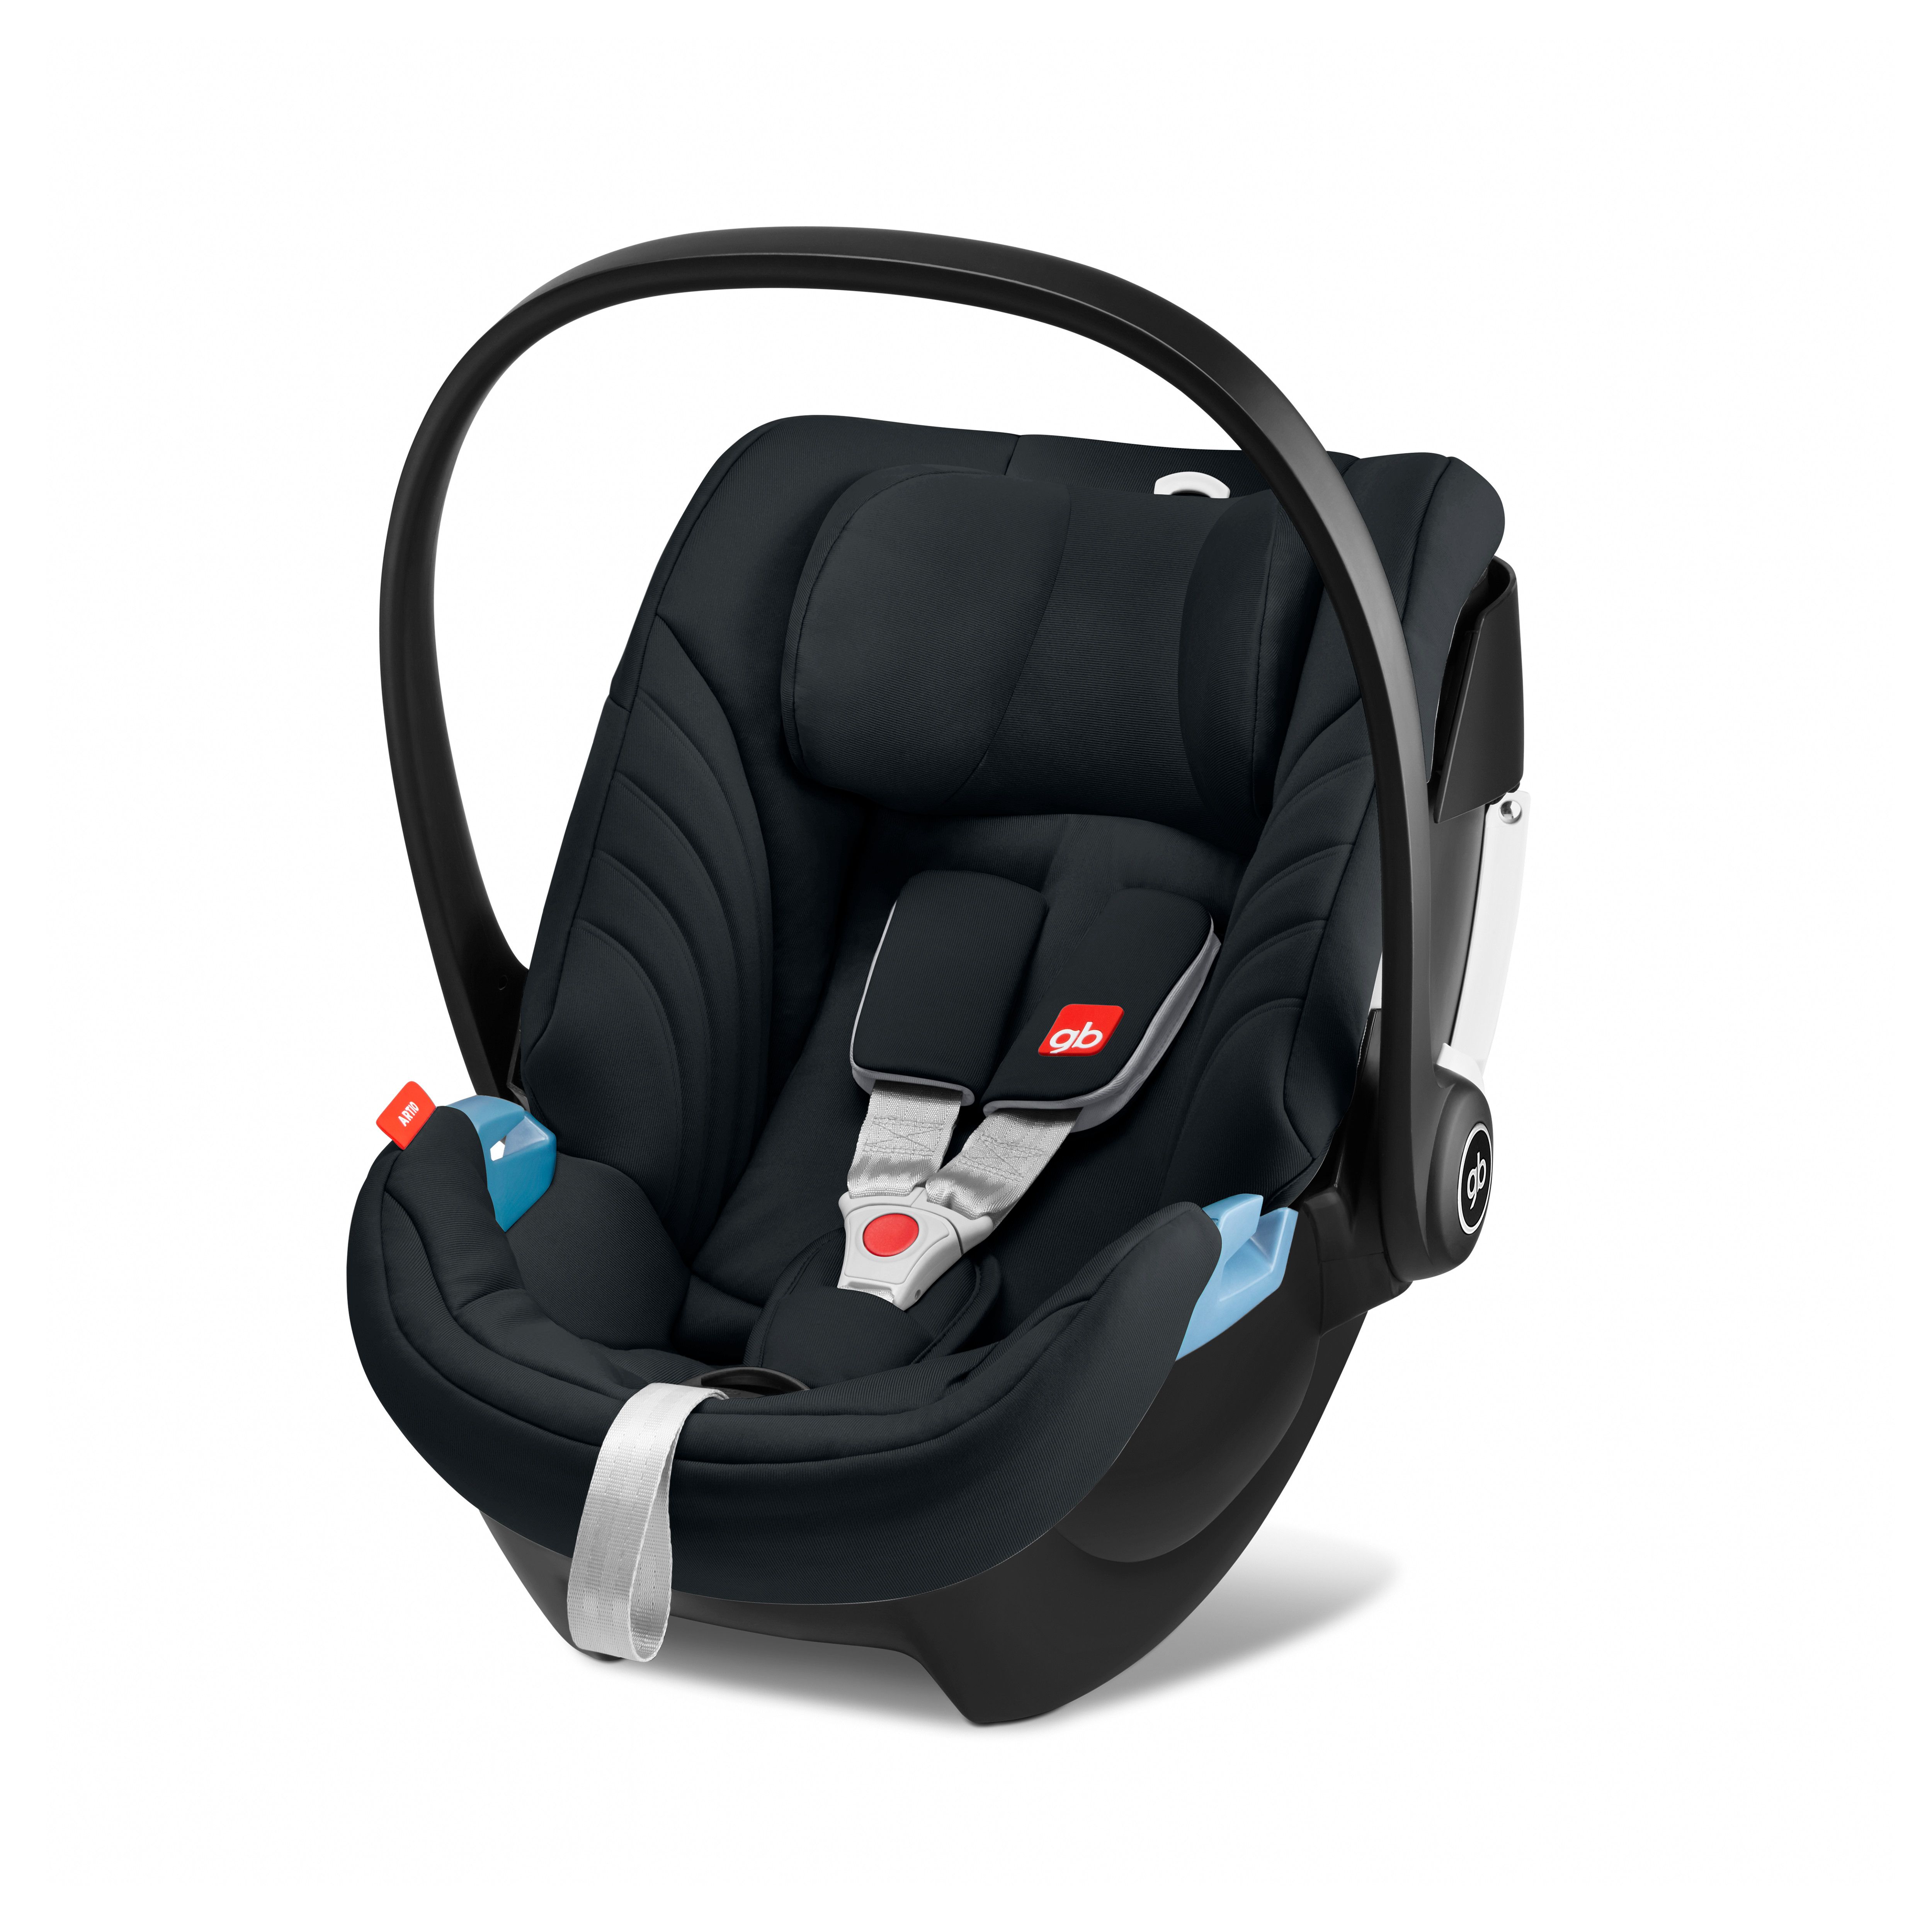 Artio infant car seat